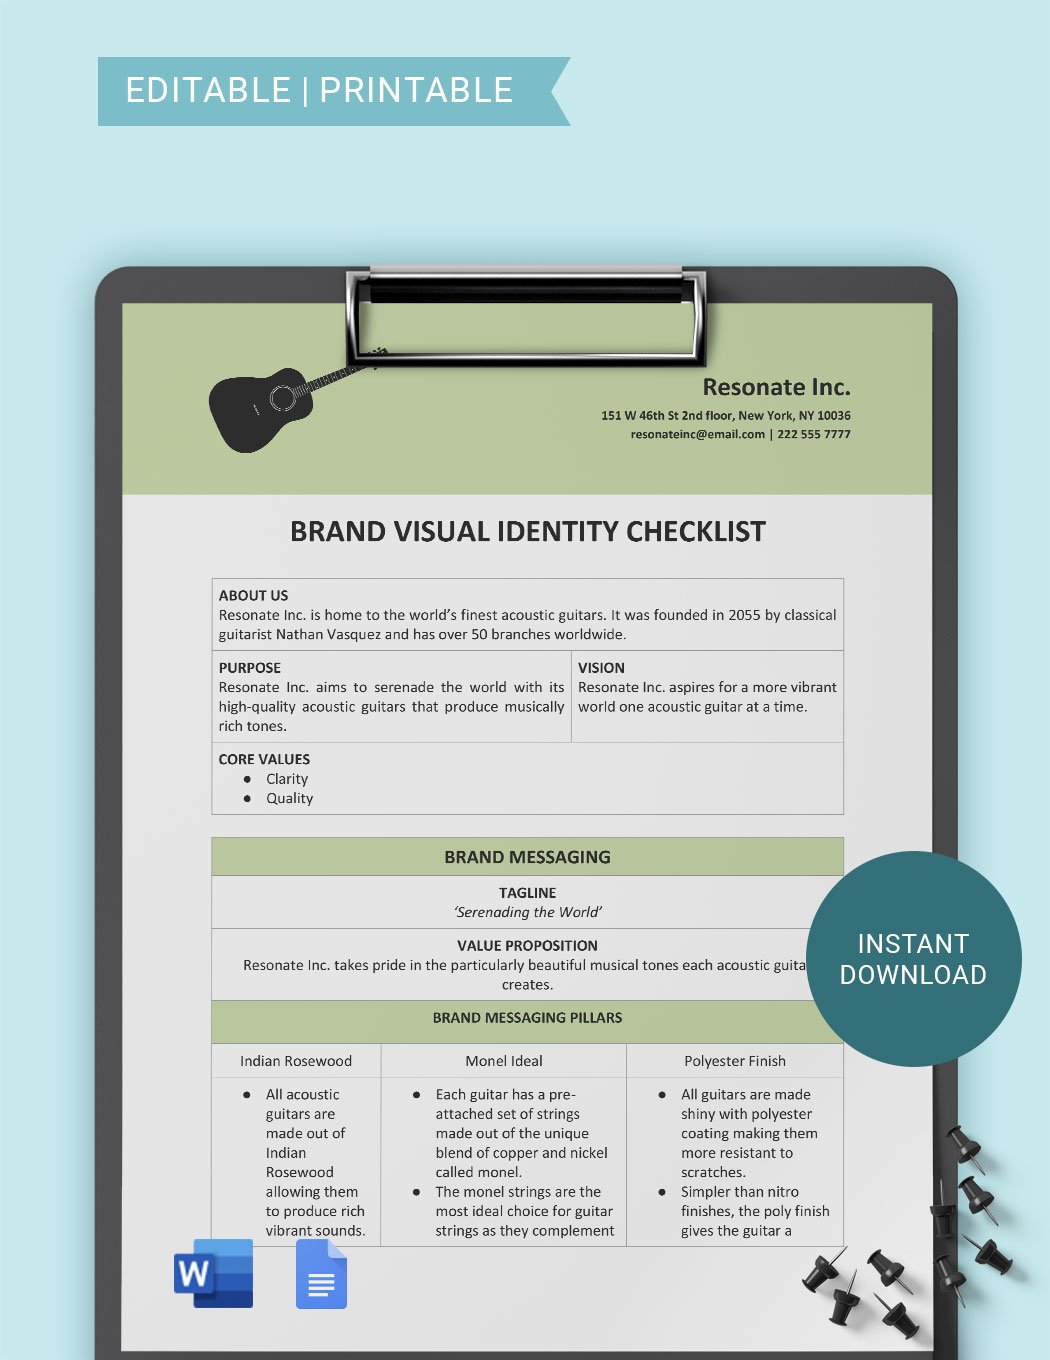 Brand Visual Identity Checklist Template in Word, Google Docs